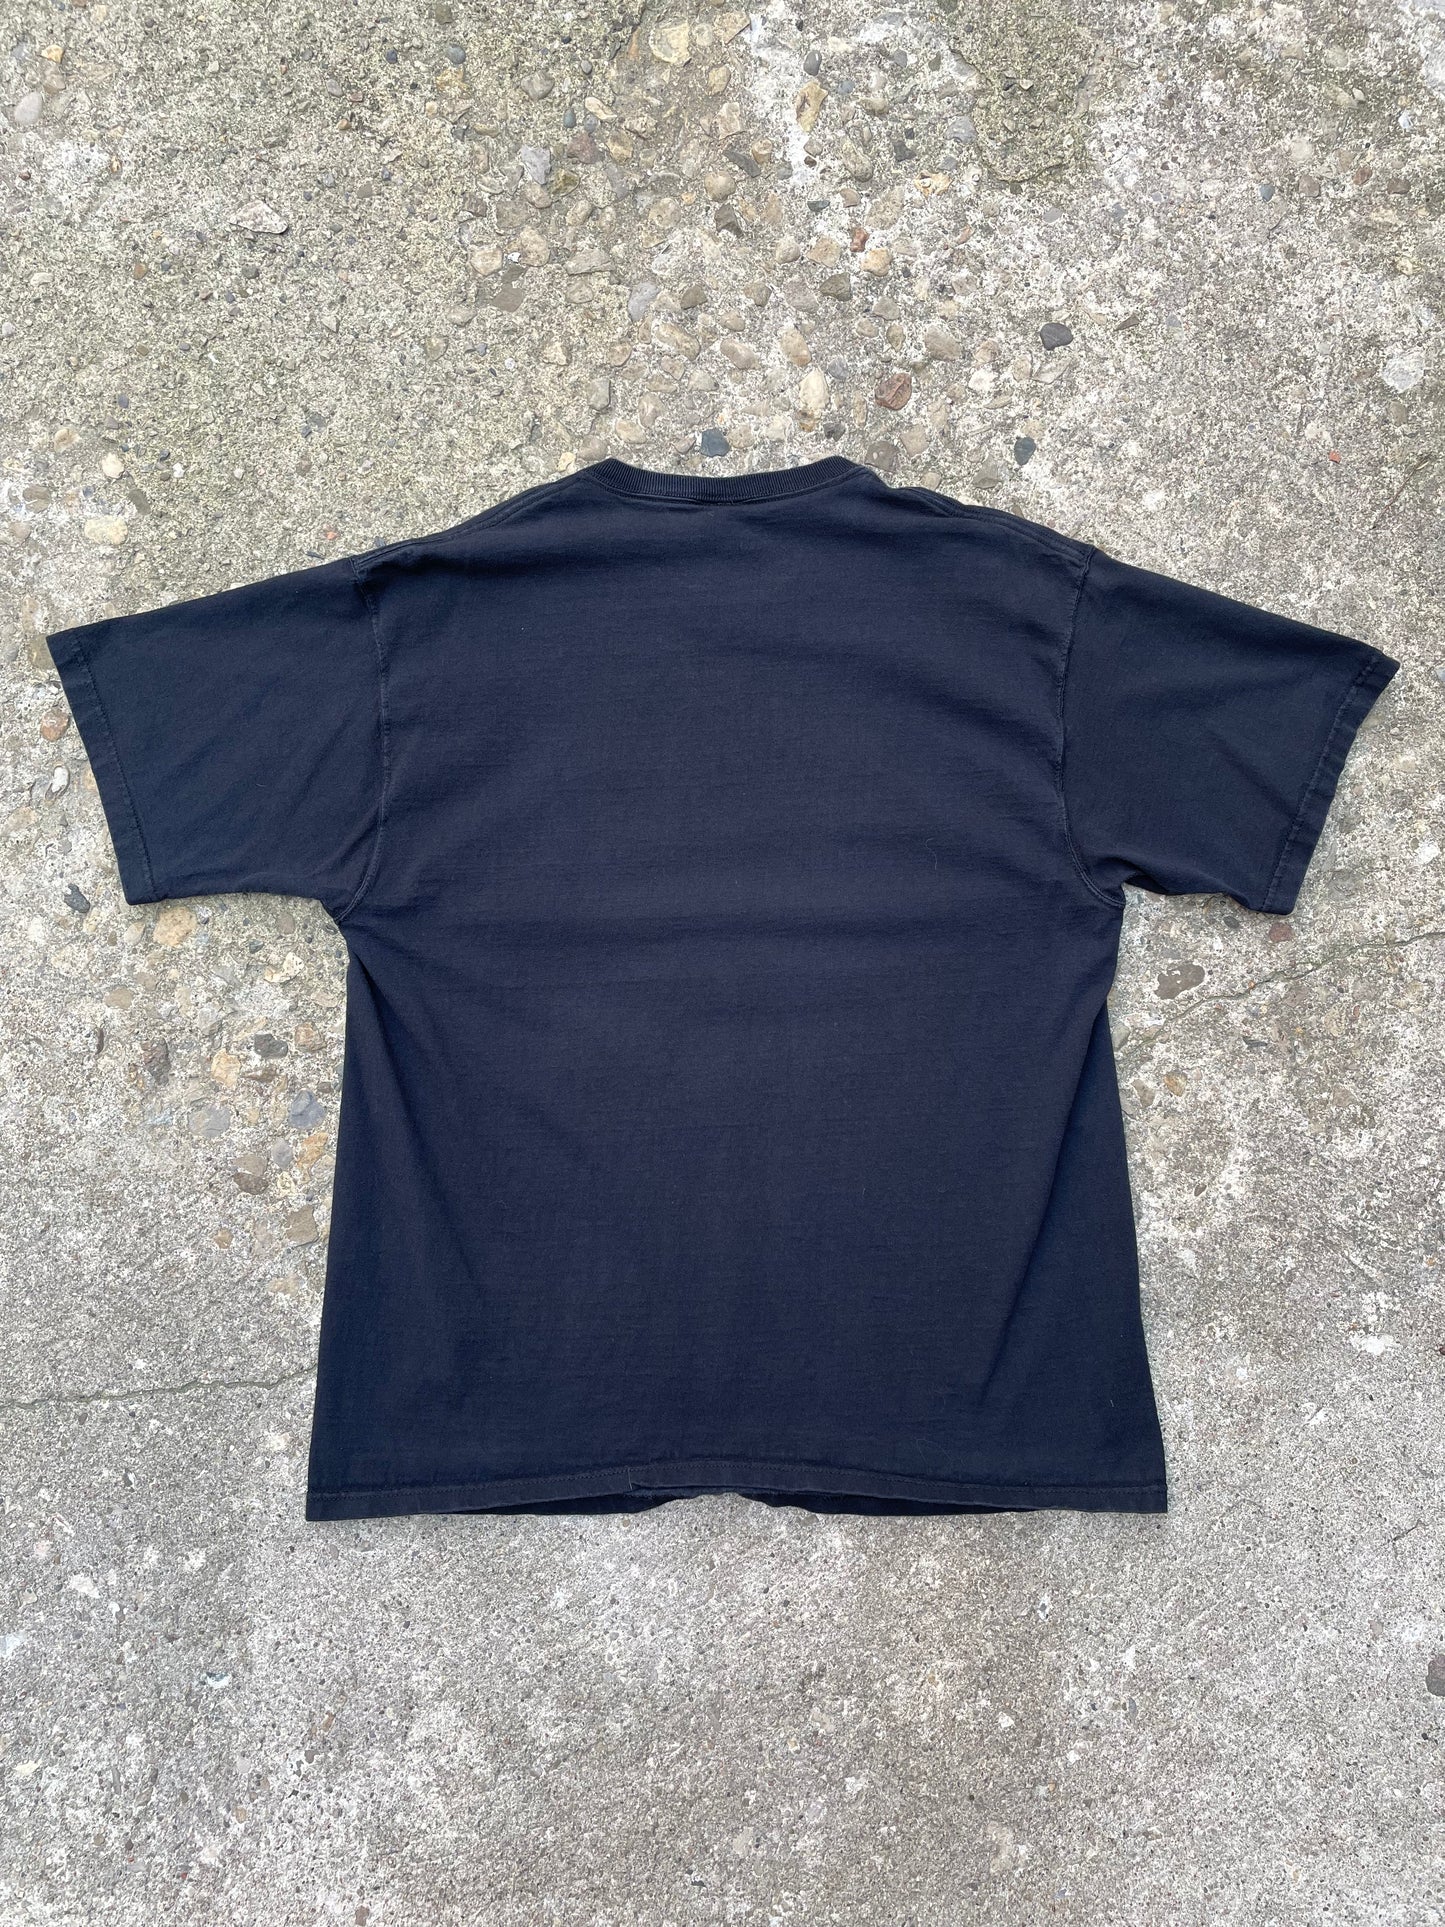 2000's Darwin Fish Evolution Graphic T-Shirt - XL